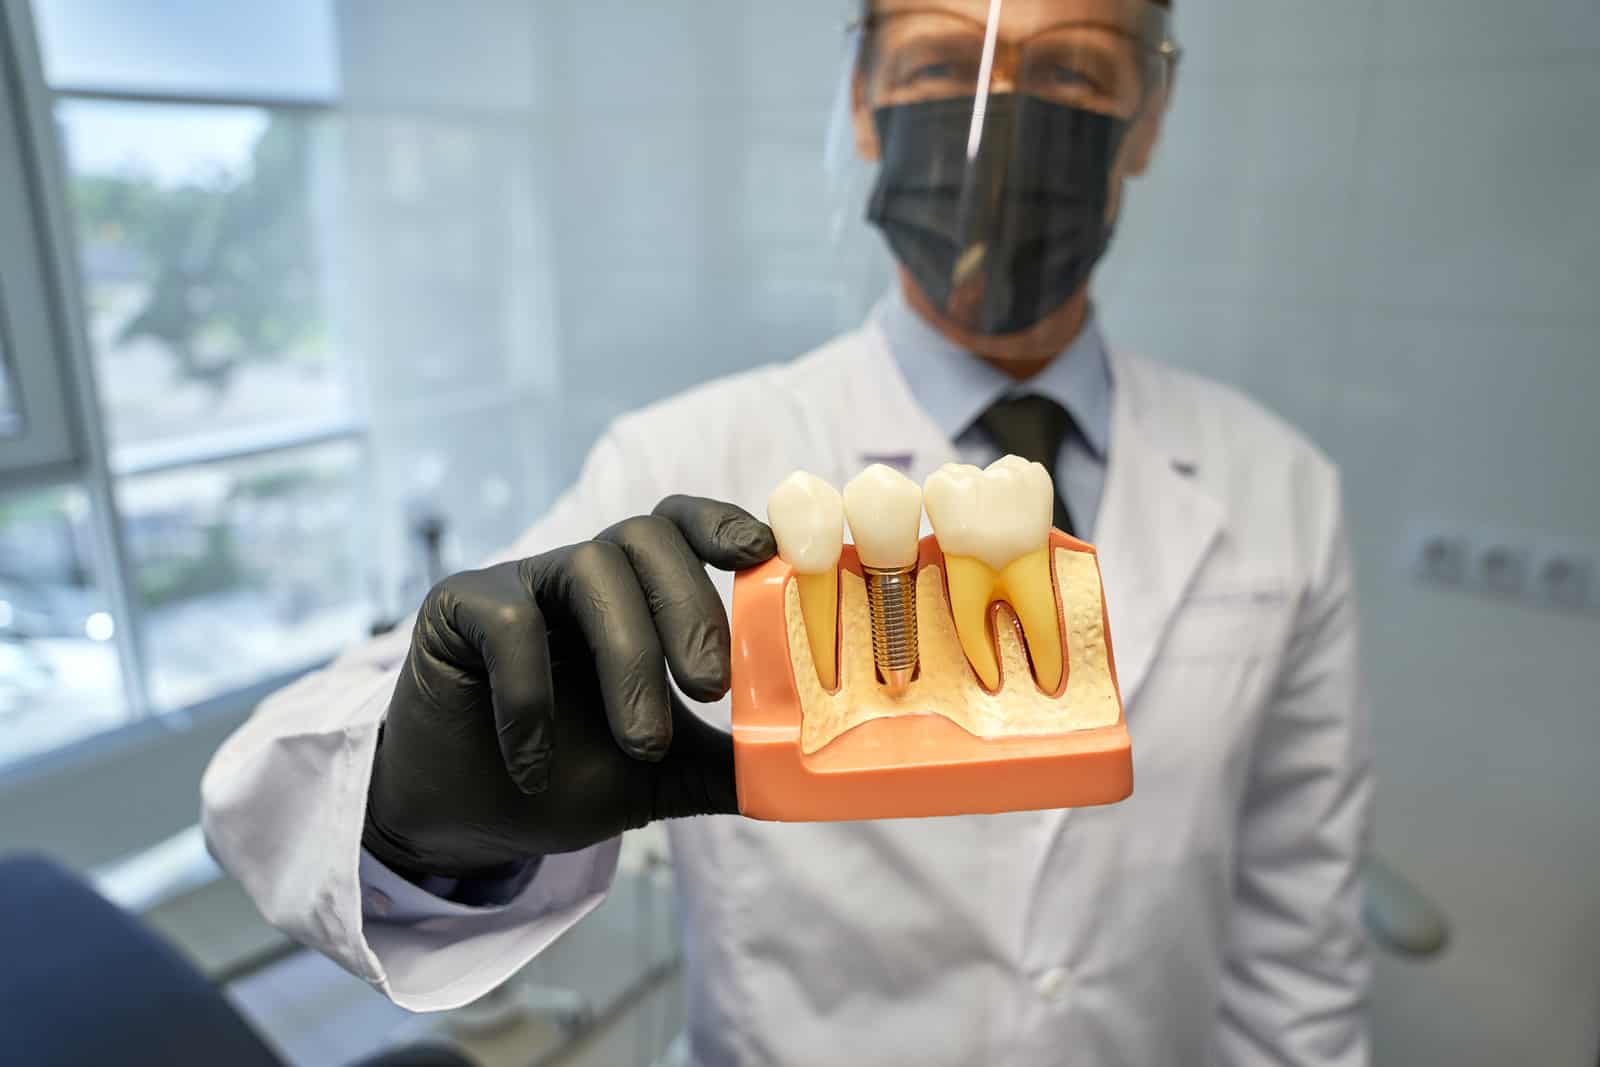 dental implant surgeon in Singapore